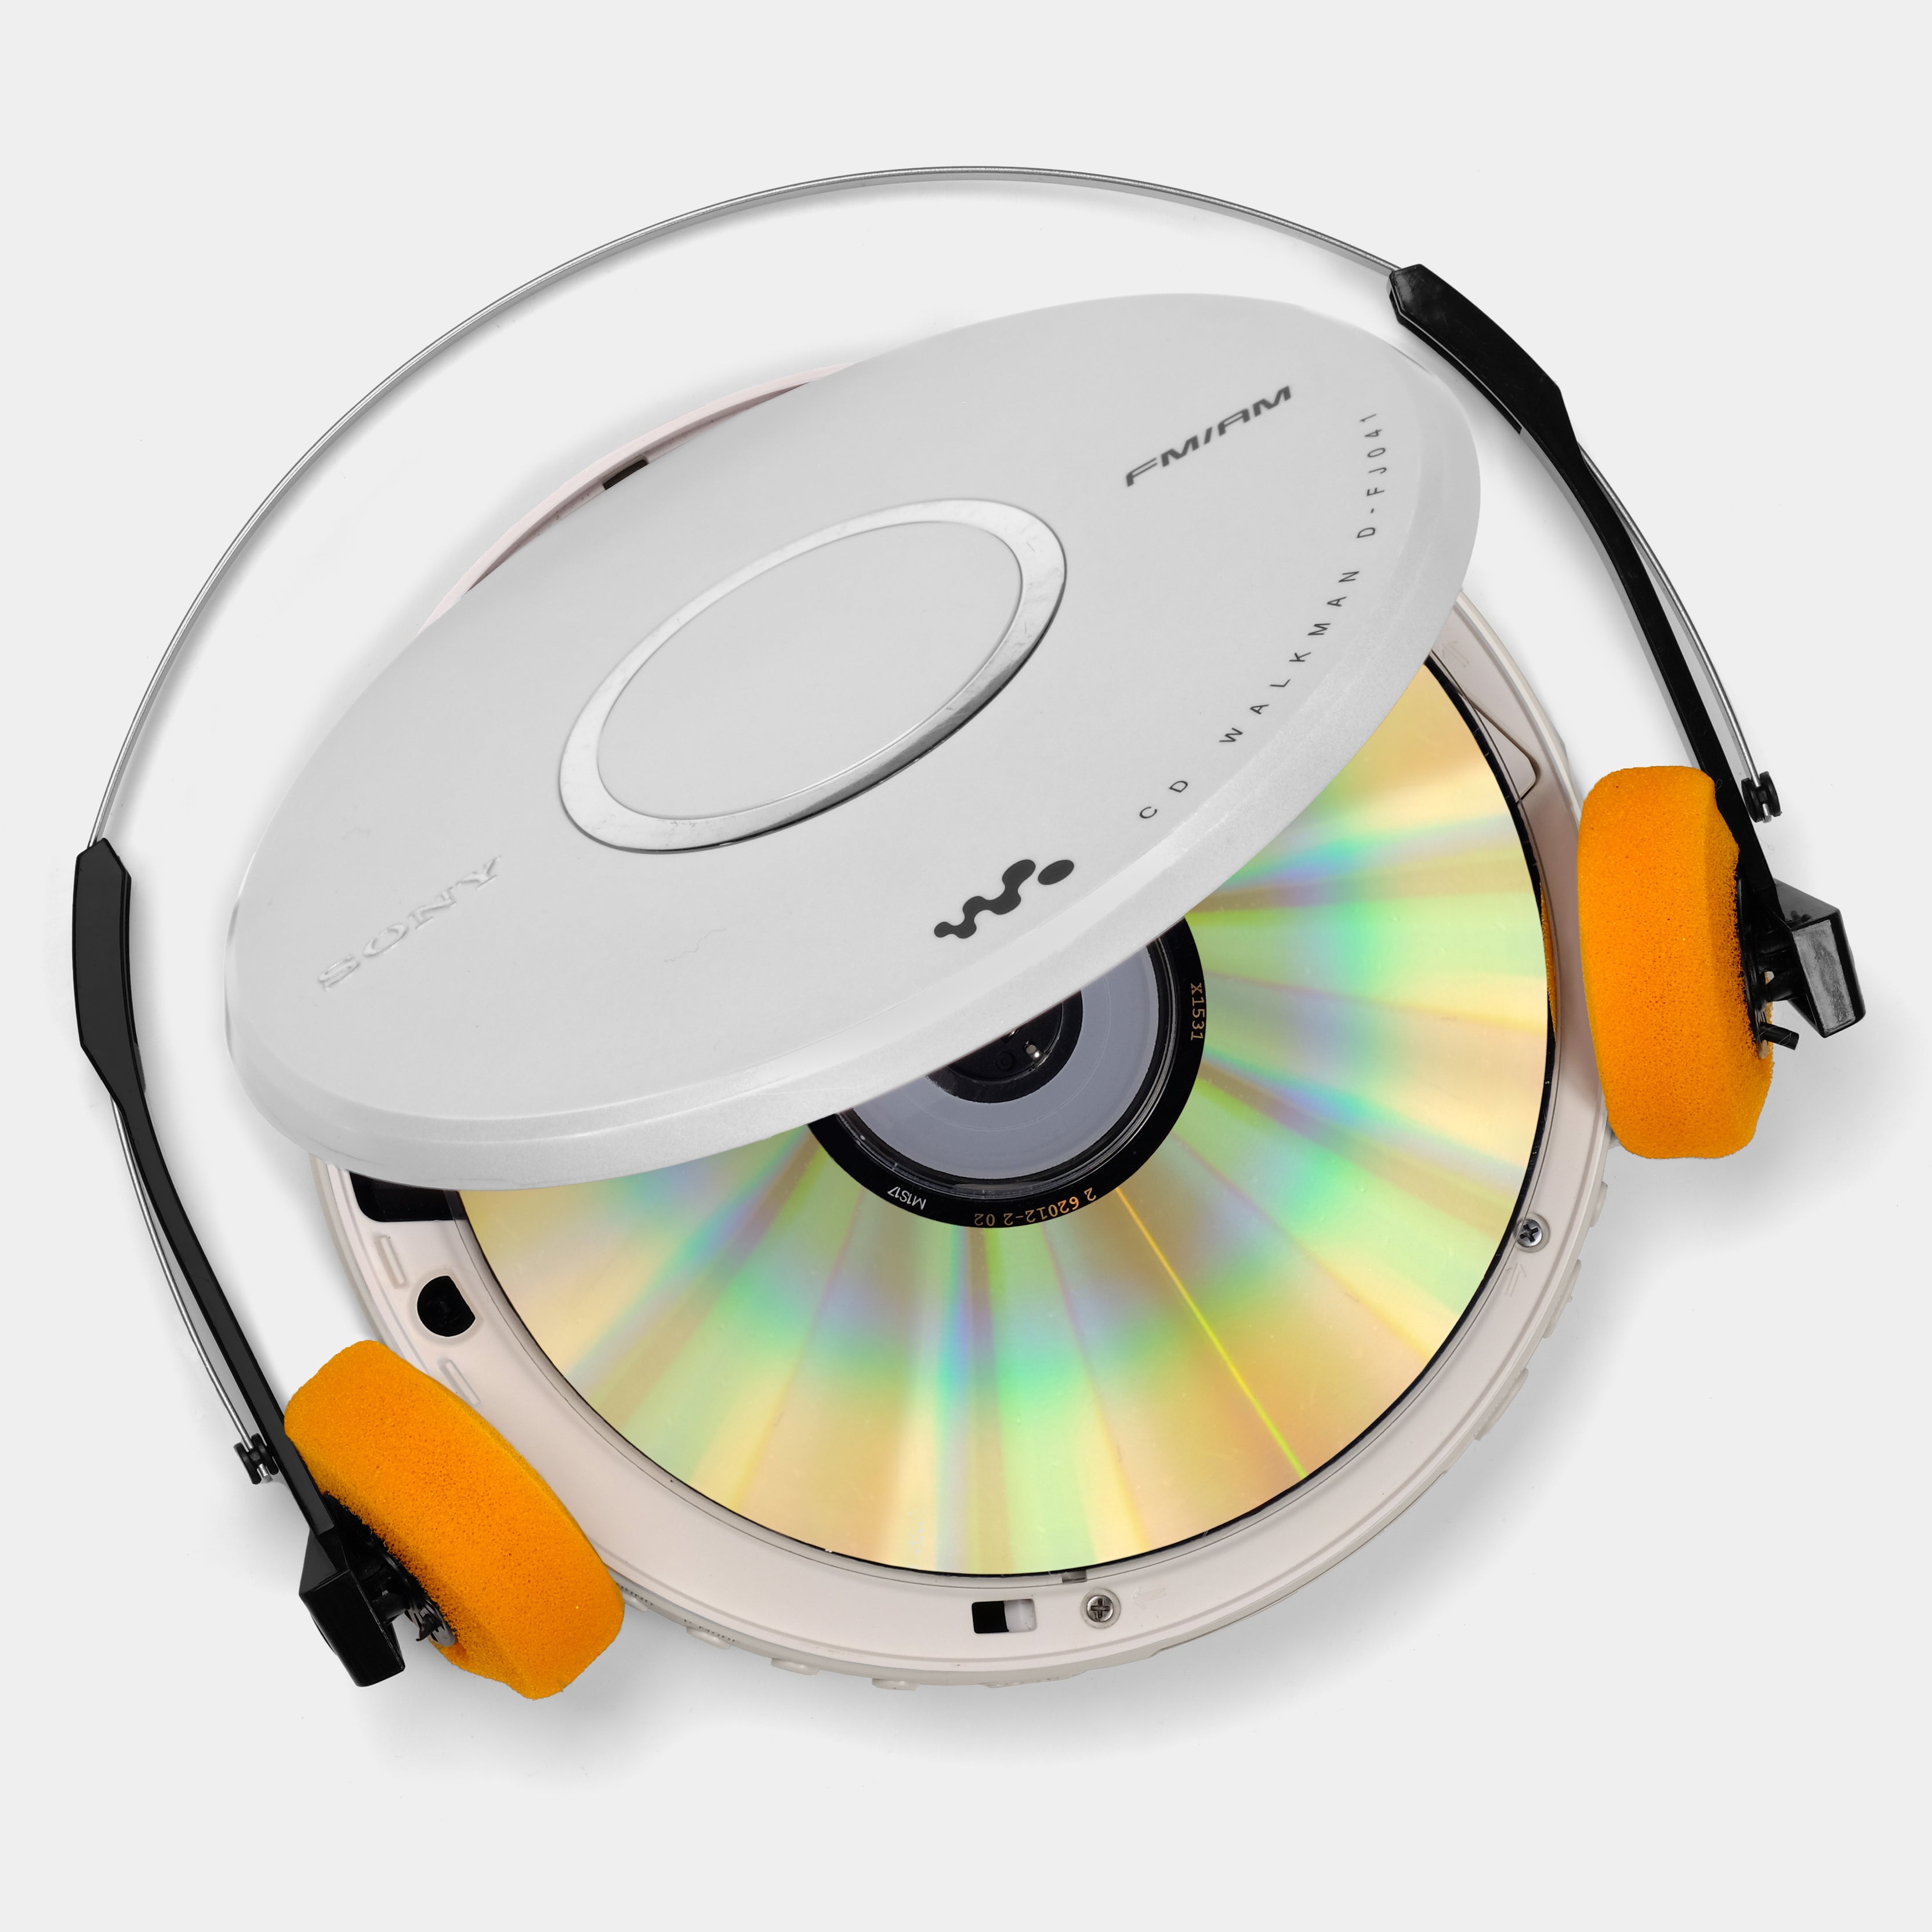 Sony Walkman D-FJ041 Portable CD Player